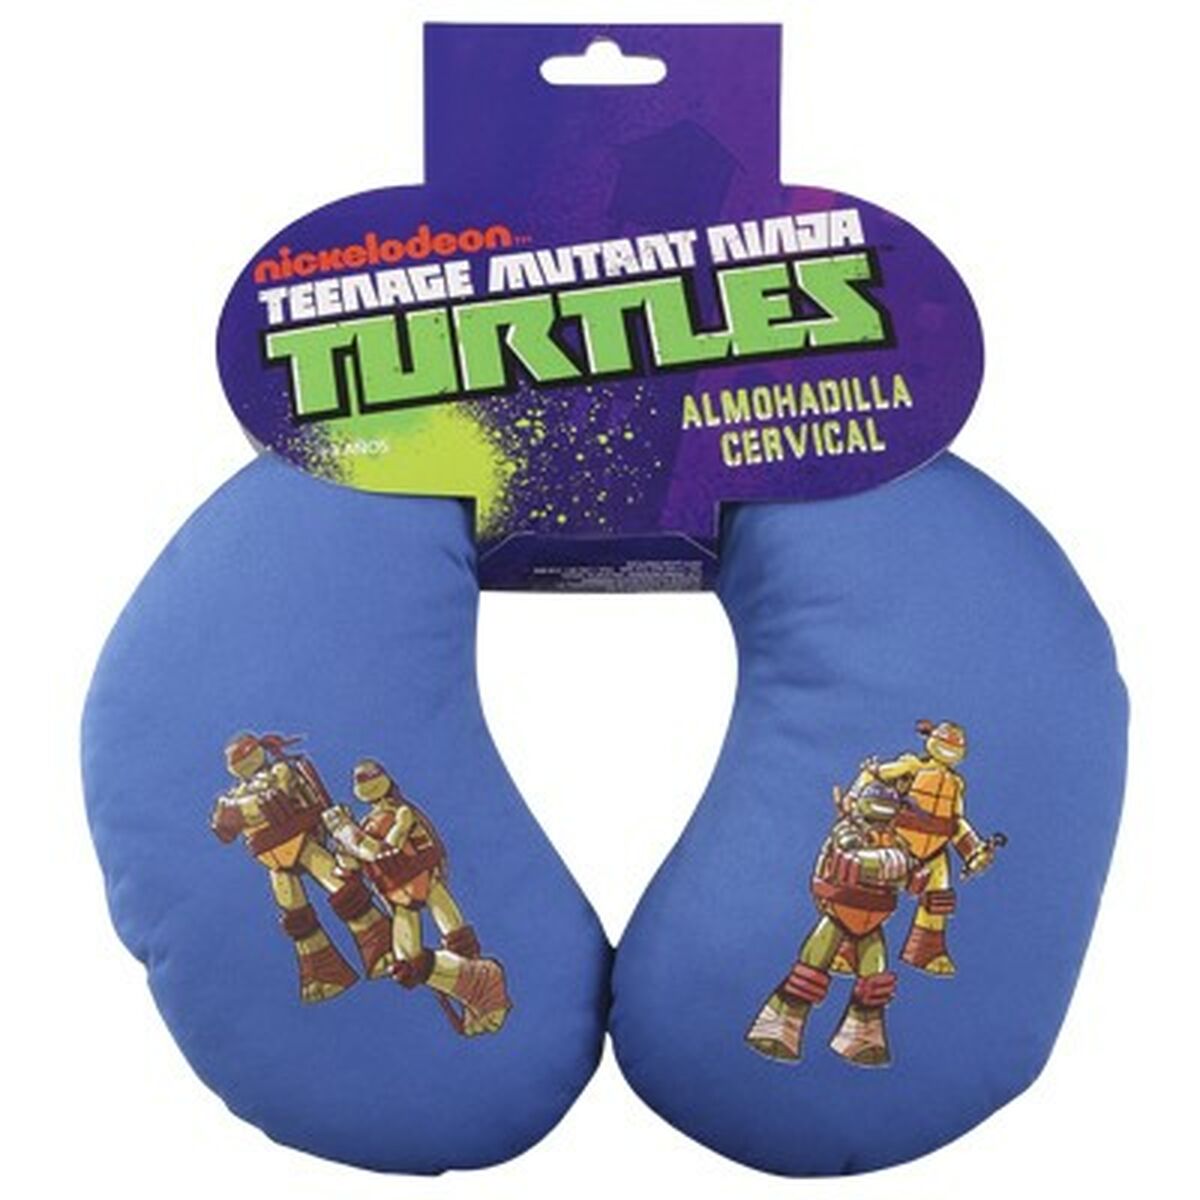 Cuscino da Viaggio Teenage Mutant Ninja Turtles TUR2010 Azzurro